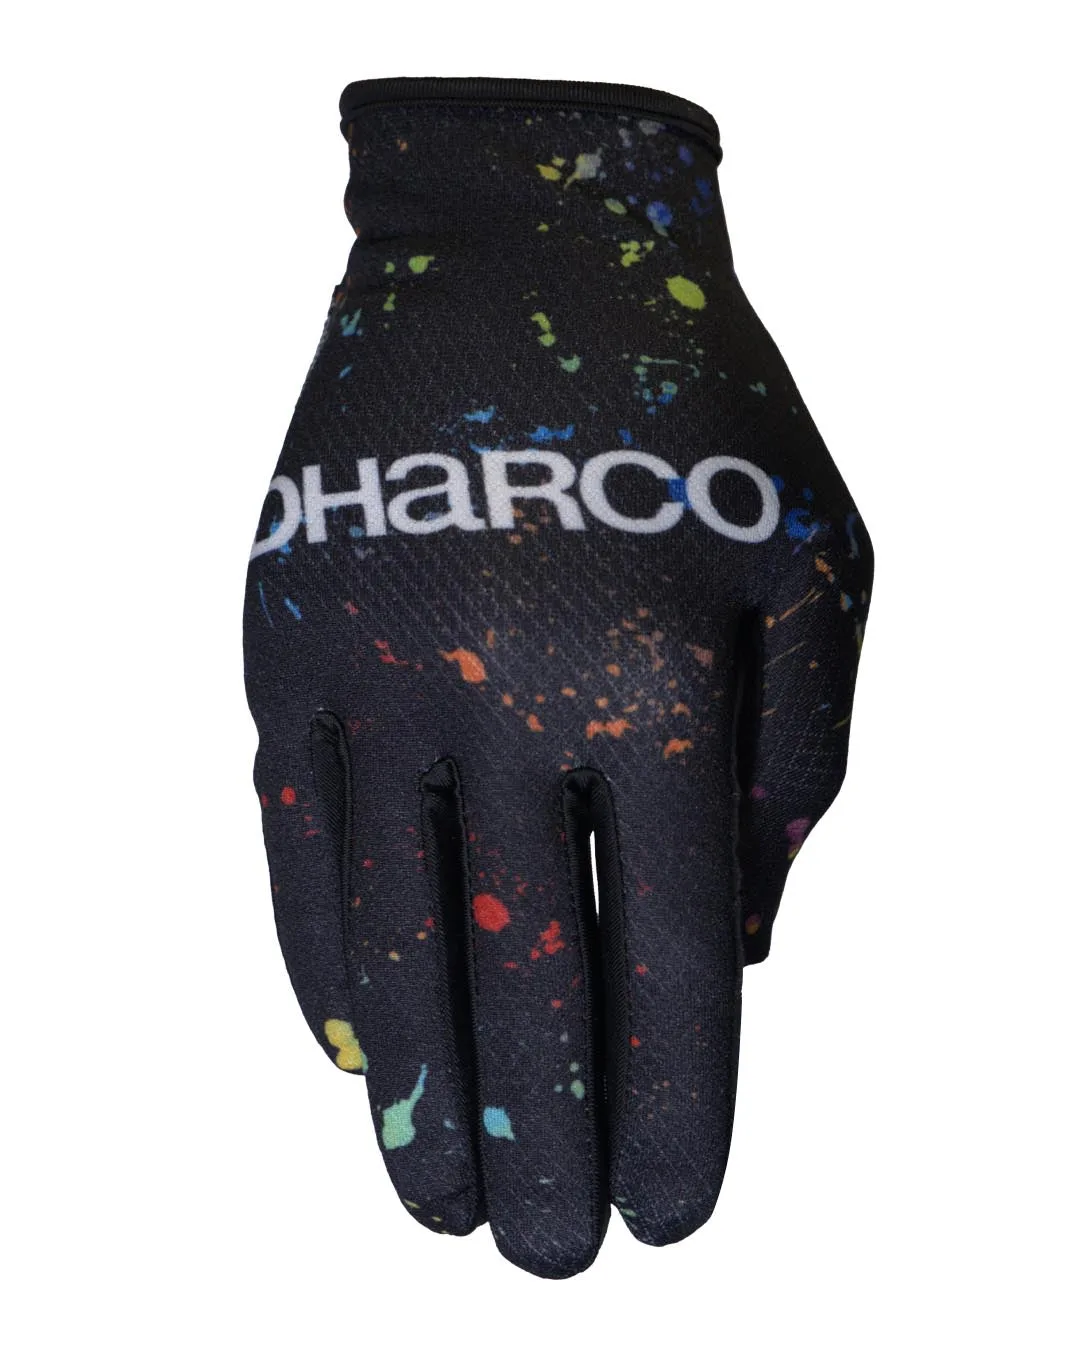 Dharco - Mens Race Glove - Supernova - Sort,Grøn,Blå,Rød,Orange S